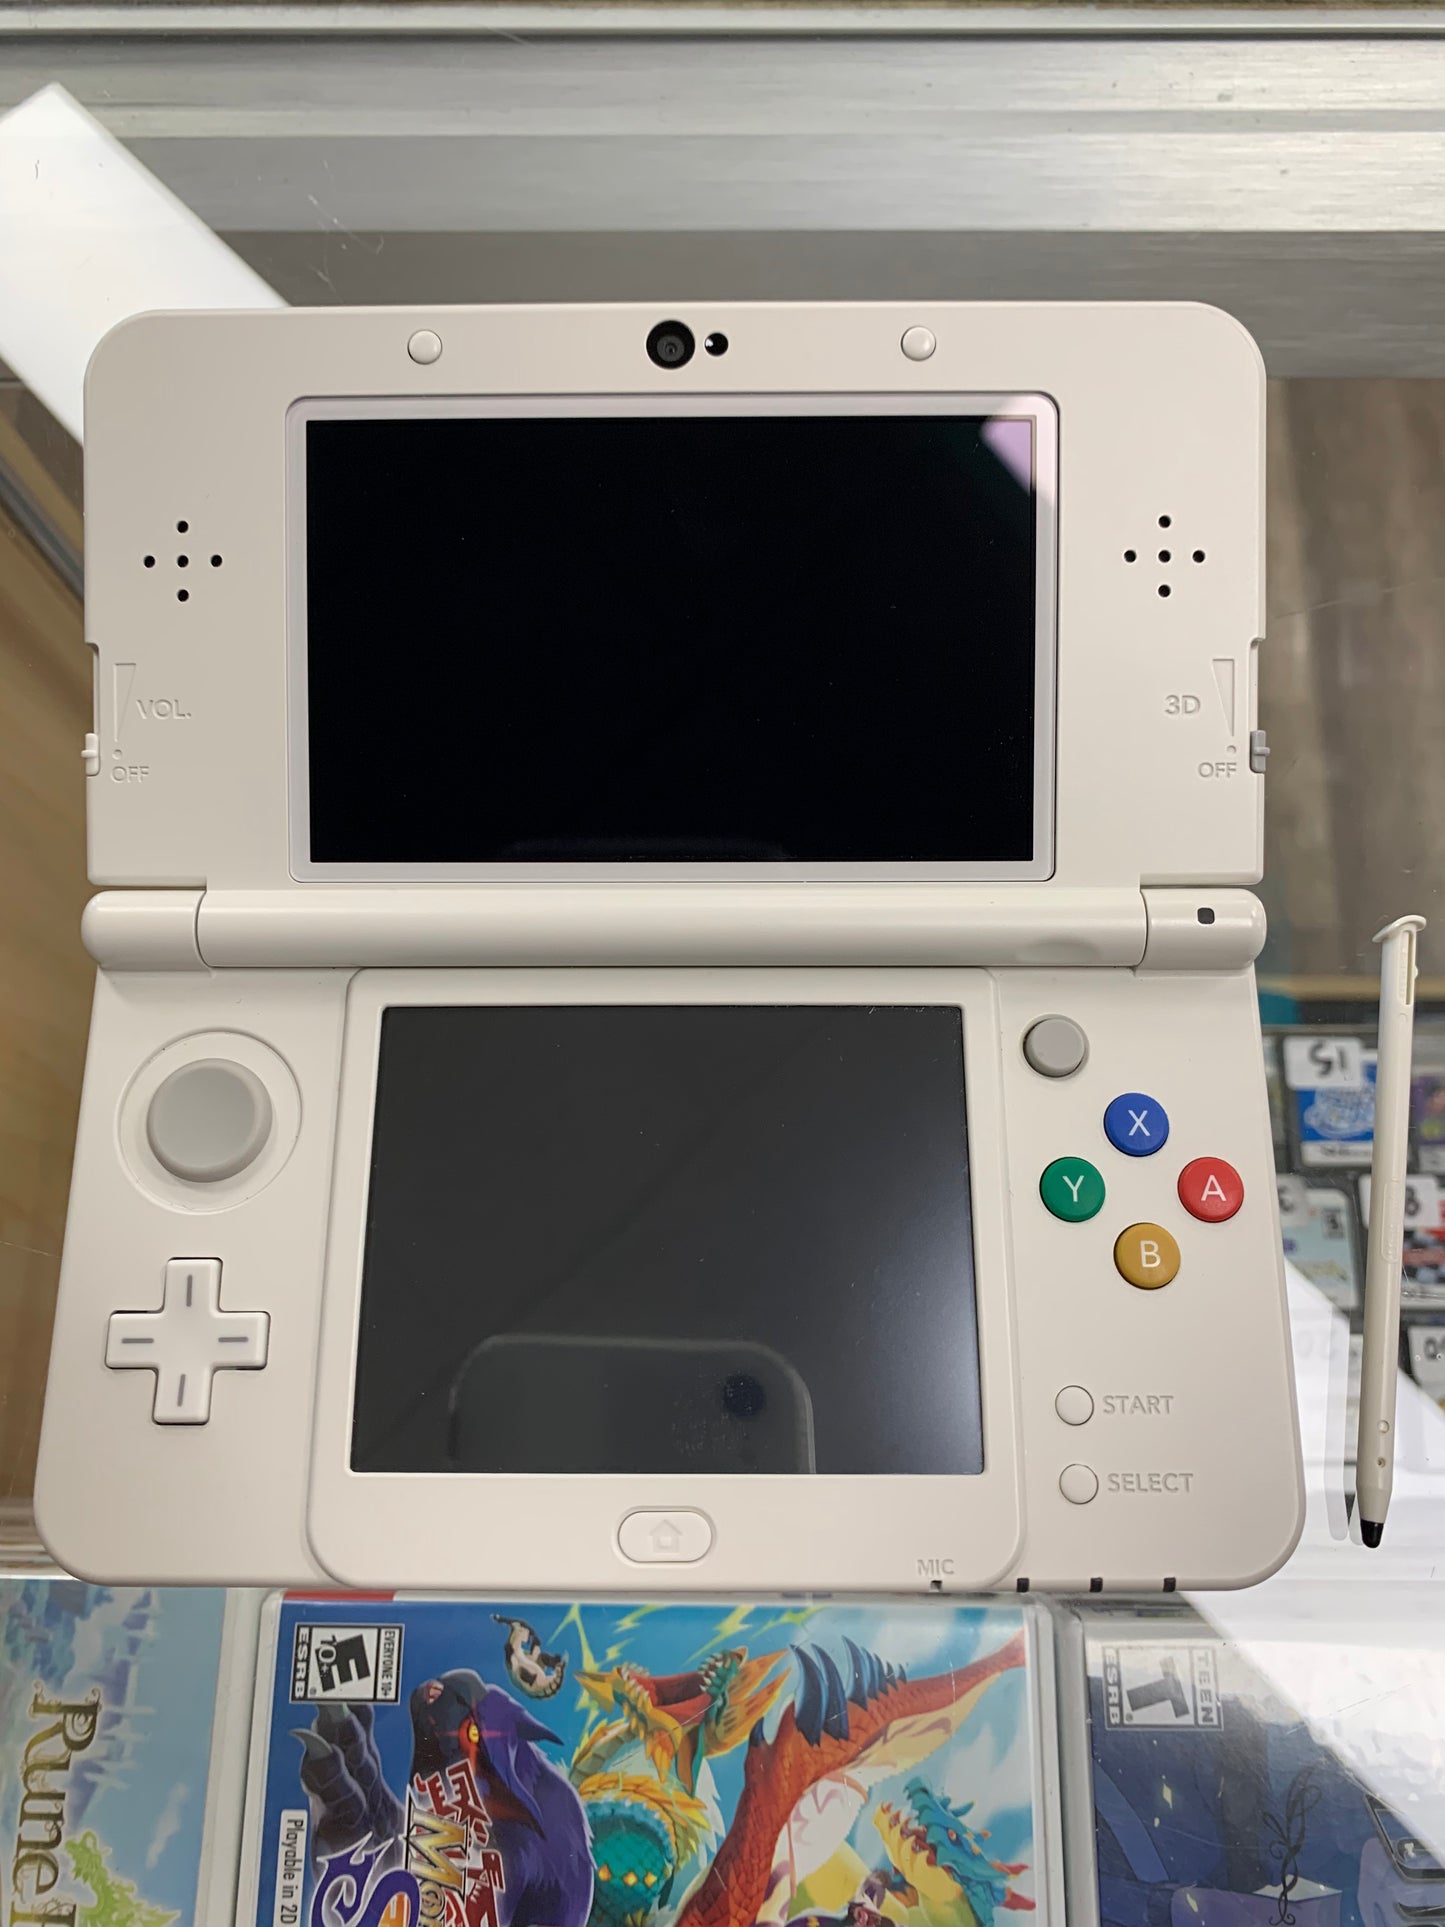 Super Mario White Edition New Nintendo 3DS System CIB with Digital Game Compatibility